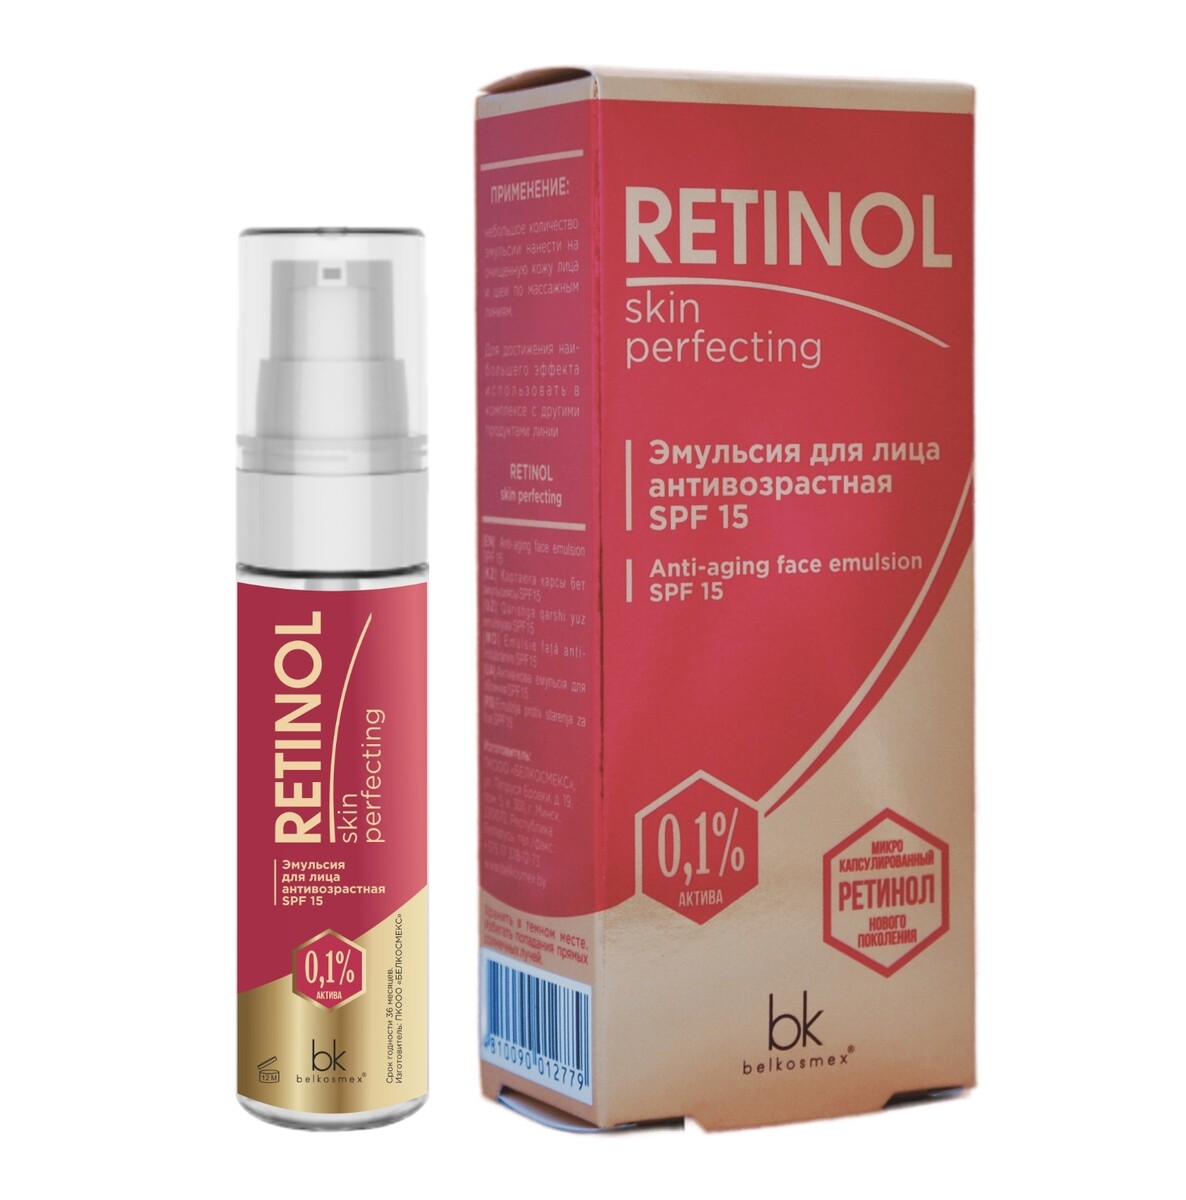 Retinol skin perfecting эмульсия для лица антивозрастная spf 15 30г крем для рук ave skin питательный 100 г